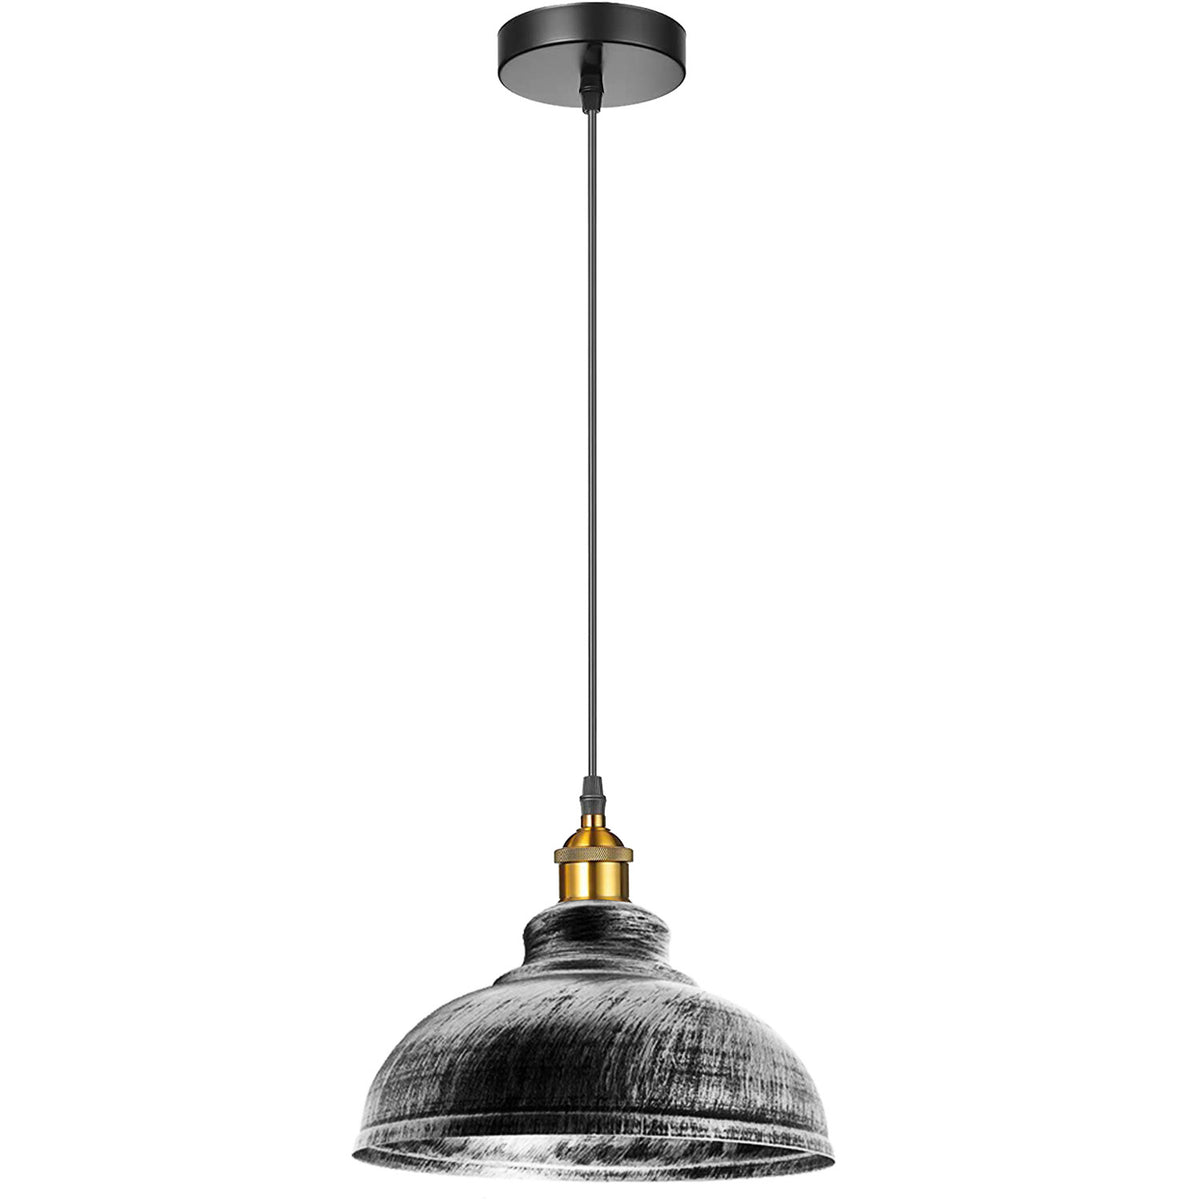 Vintage Industrial Antique Loft Ceiling Light Metal Lamp Shade Pendant Fixture 